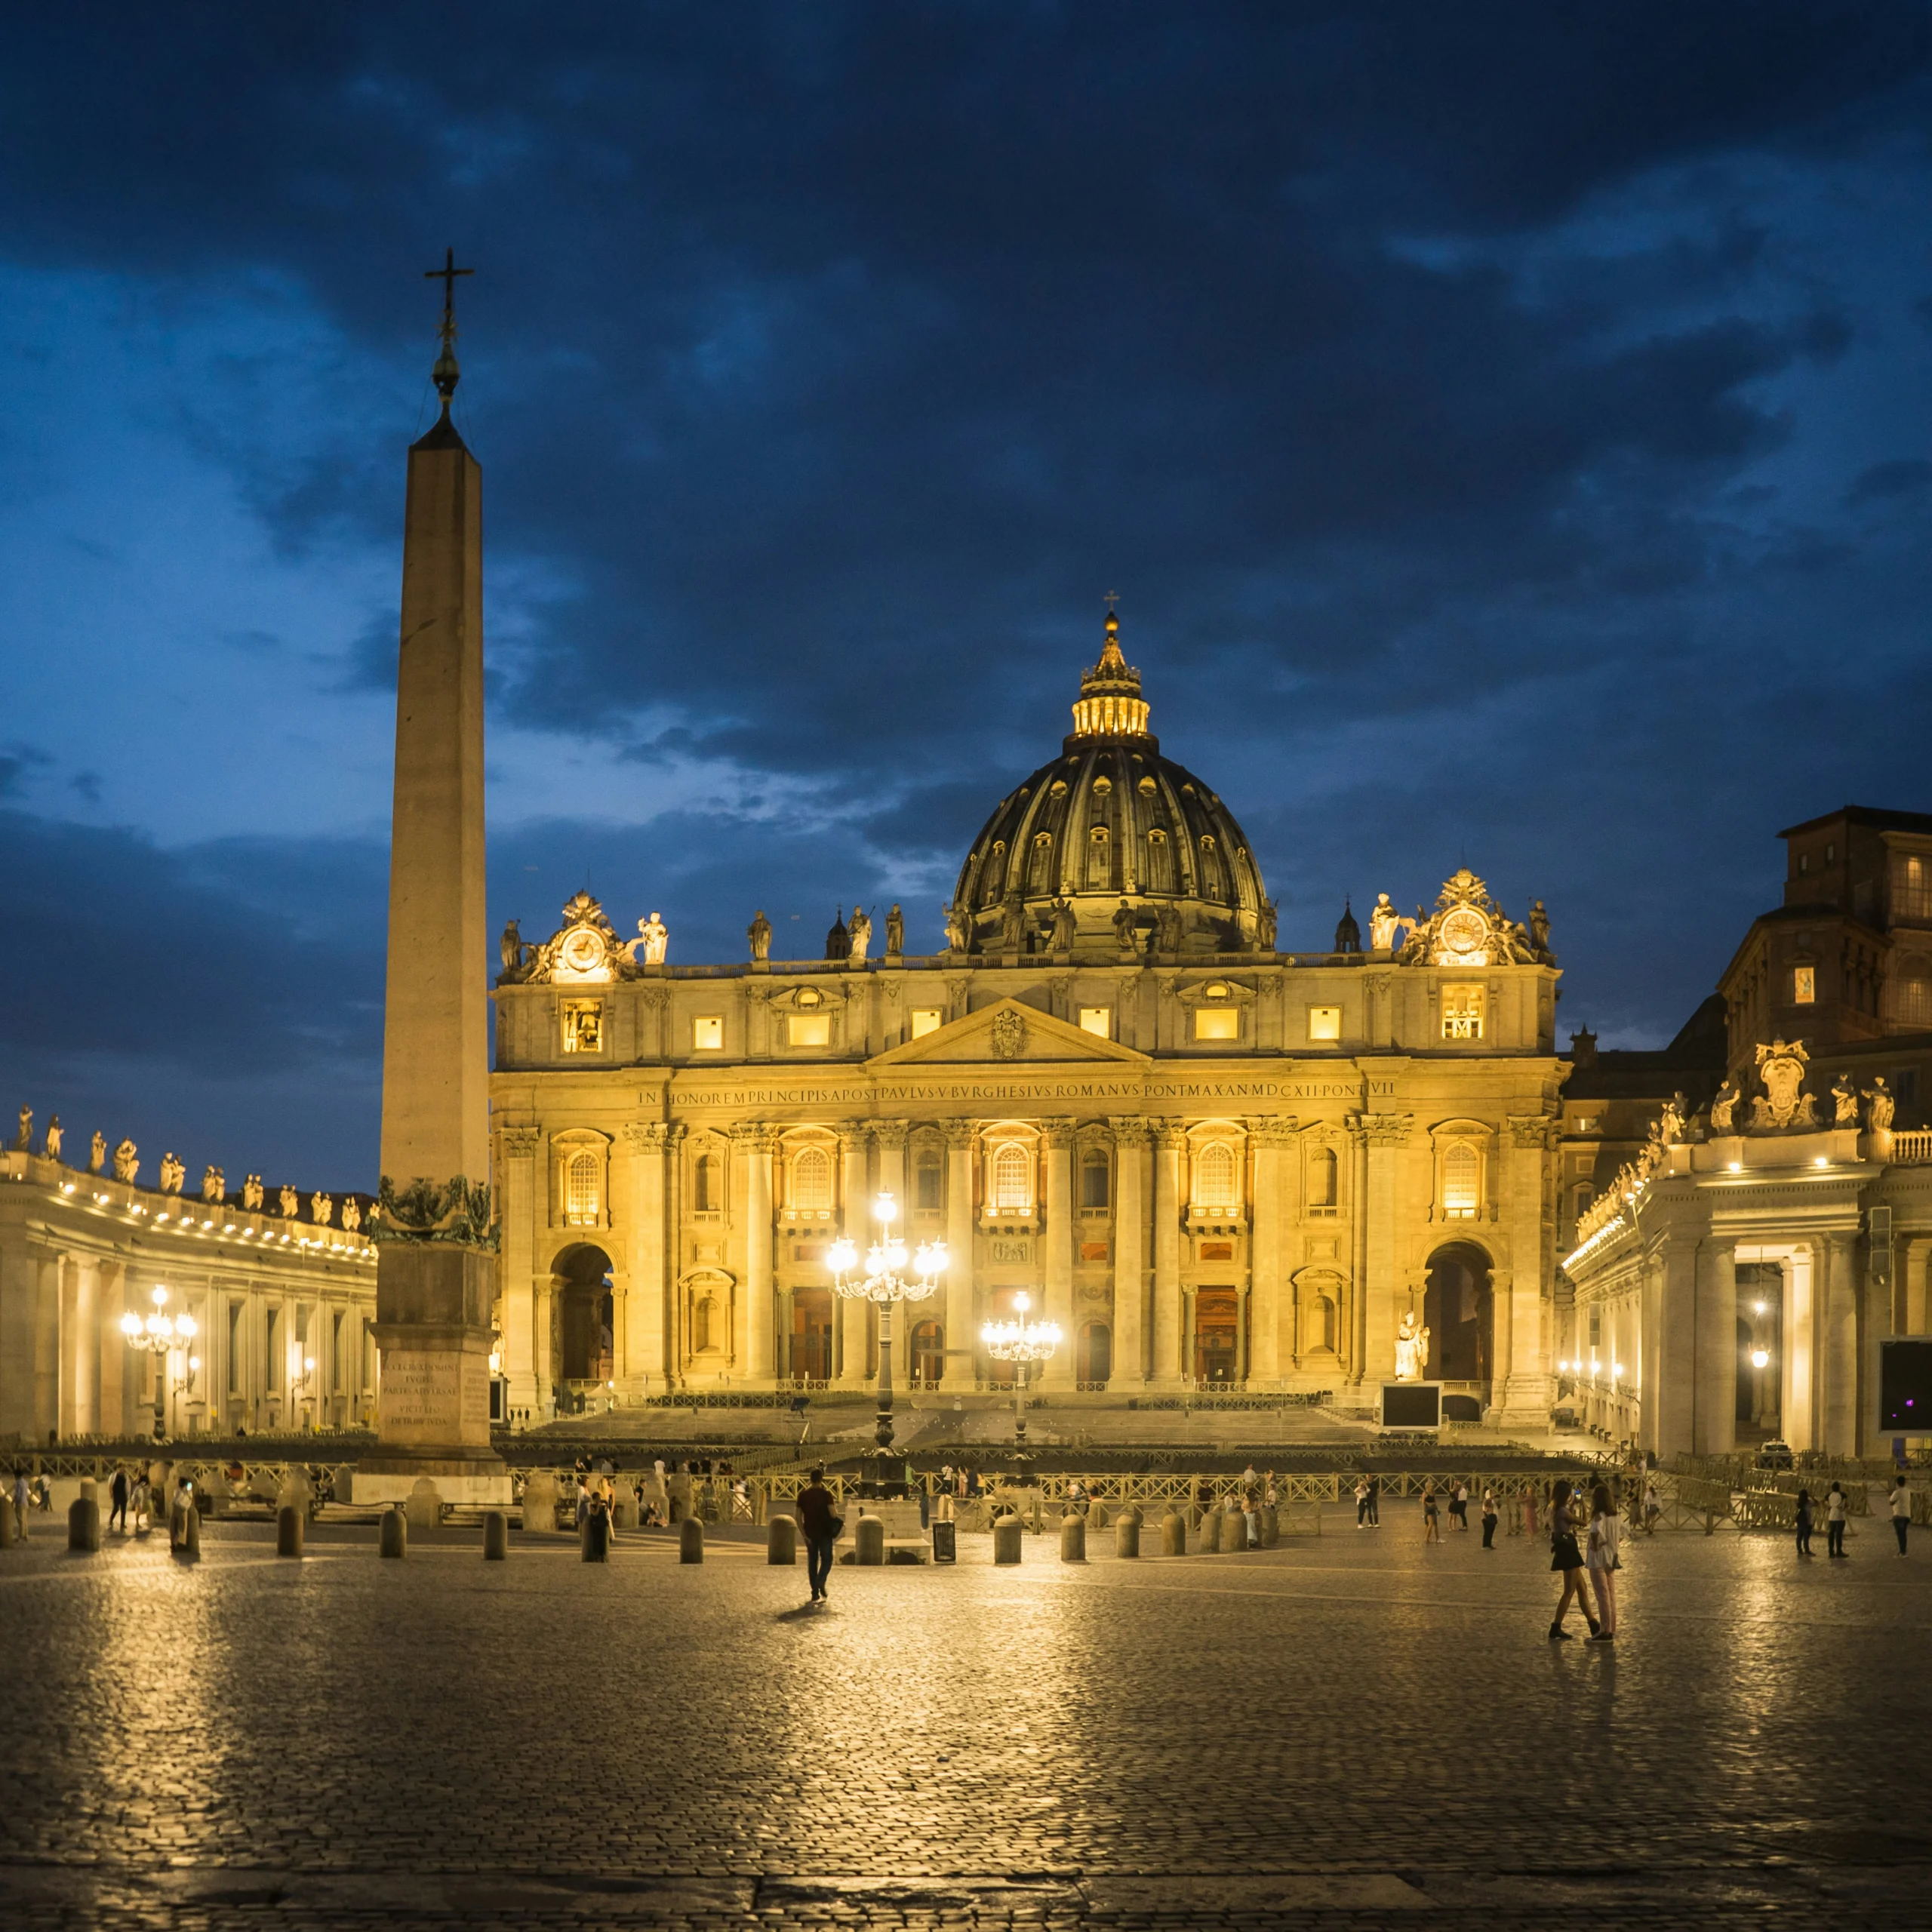 What unique experiences can visitors enjoy during a Vatican night tour?